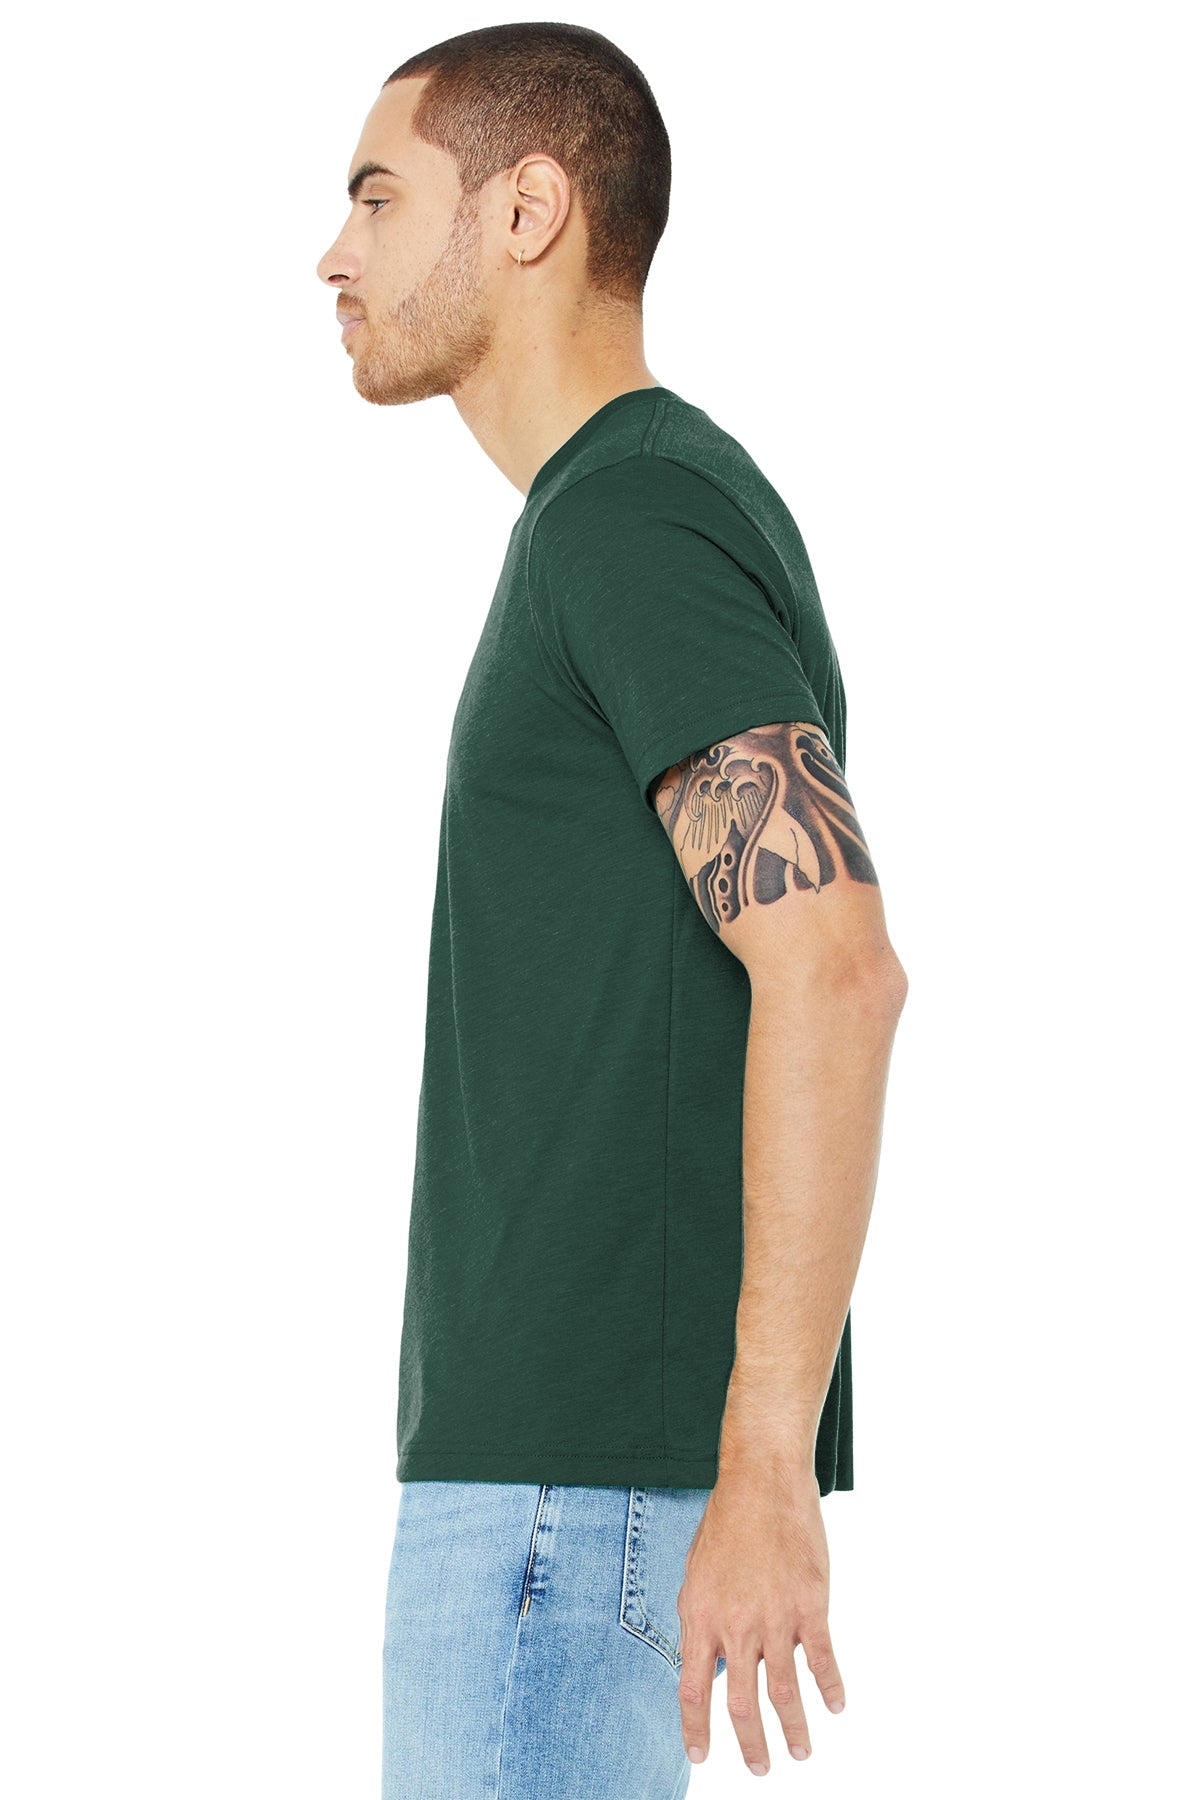 bella + canvas unisex triblend short sleeve t-shirt 3413c solid forst trbl